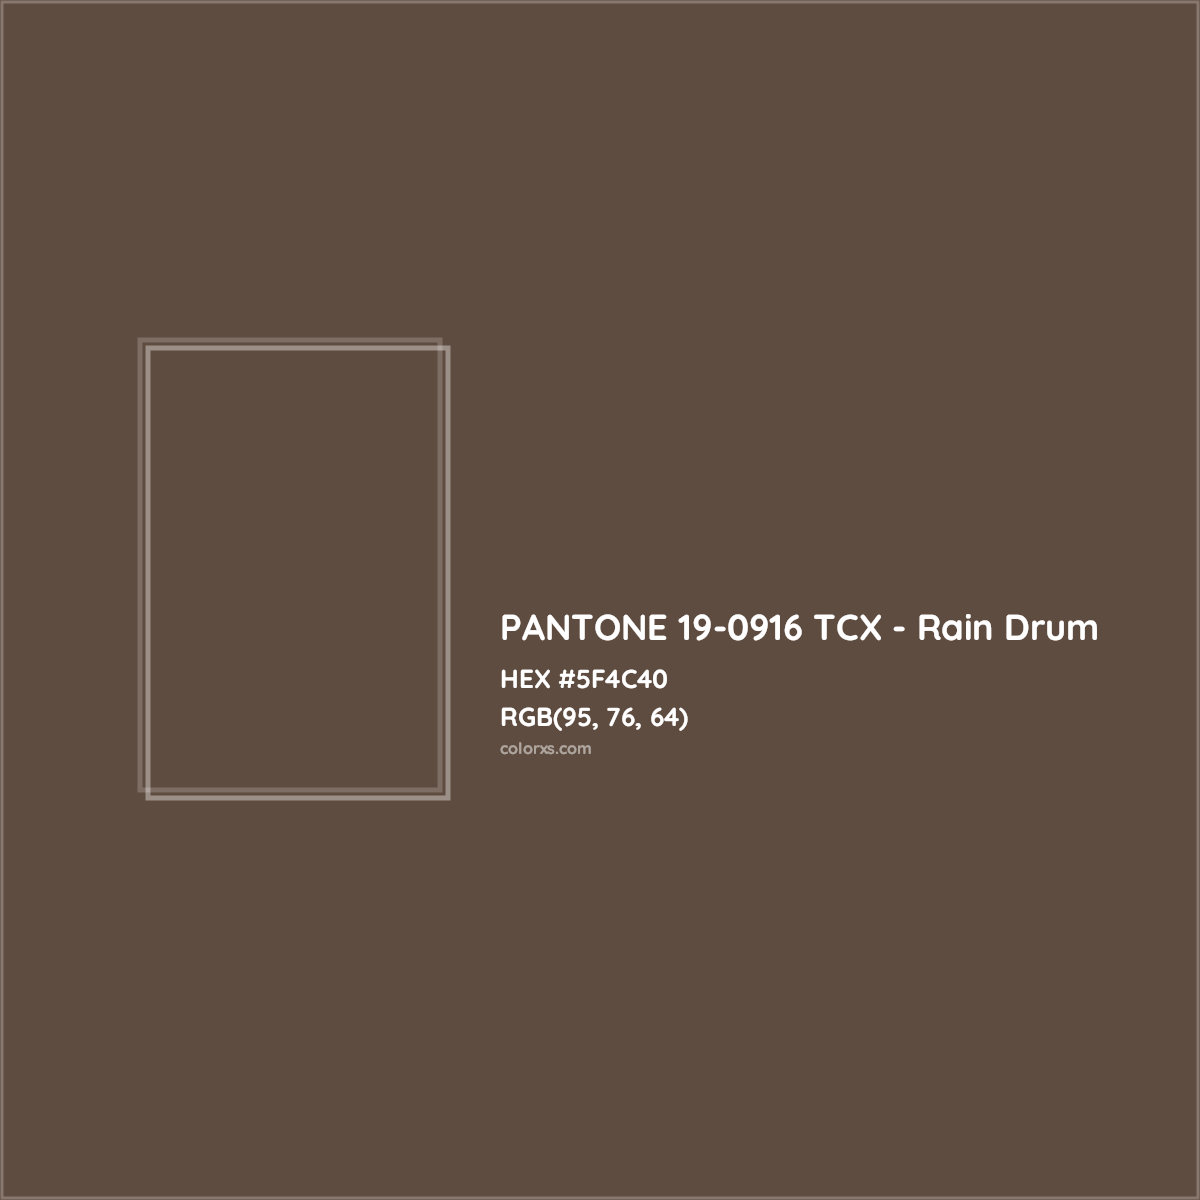 HEX #5F4C40 PANTONE 19-0916 TCX - Rain Drum CMS Pantone TCX - Color Code